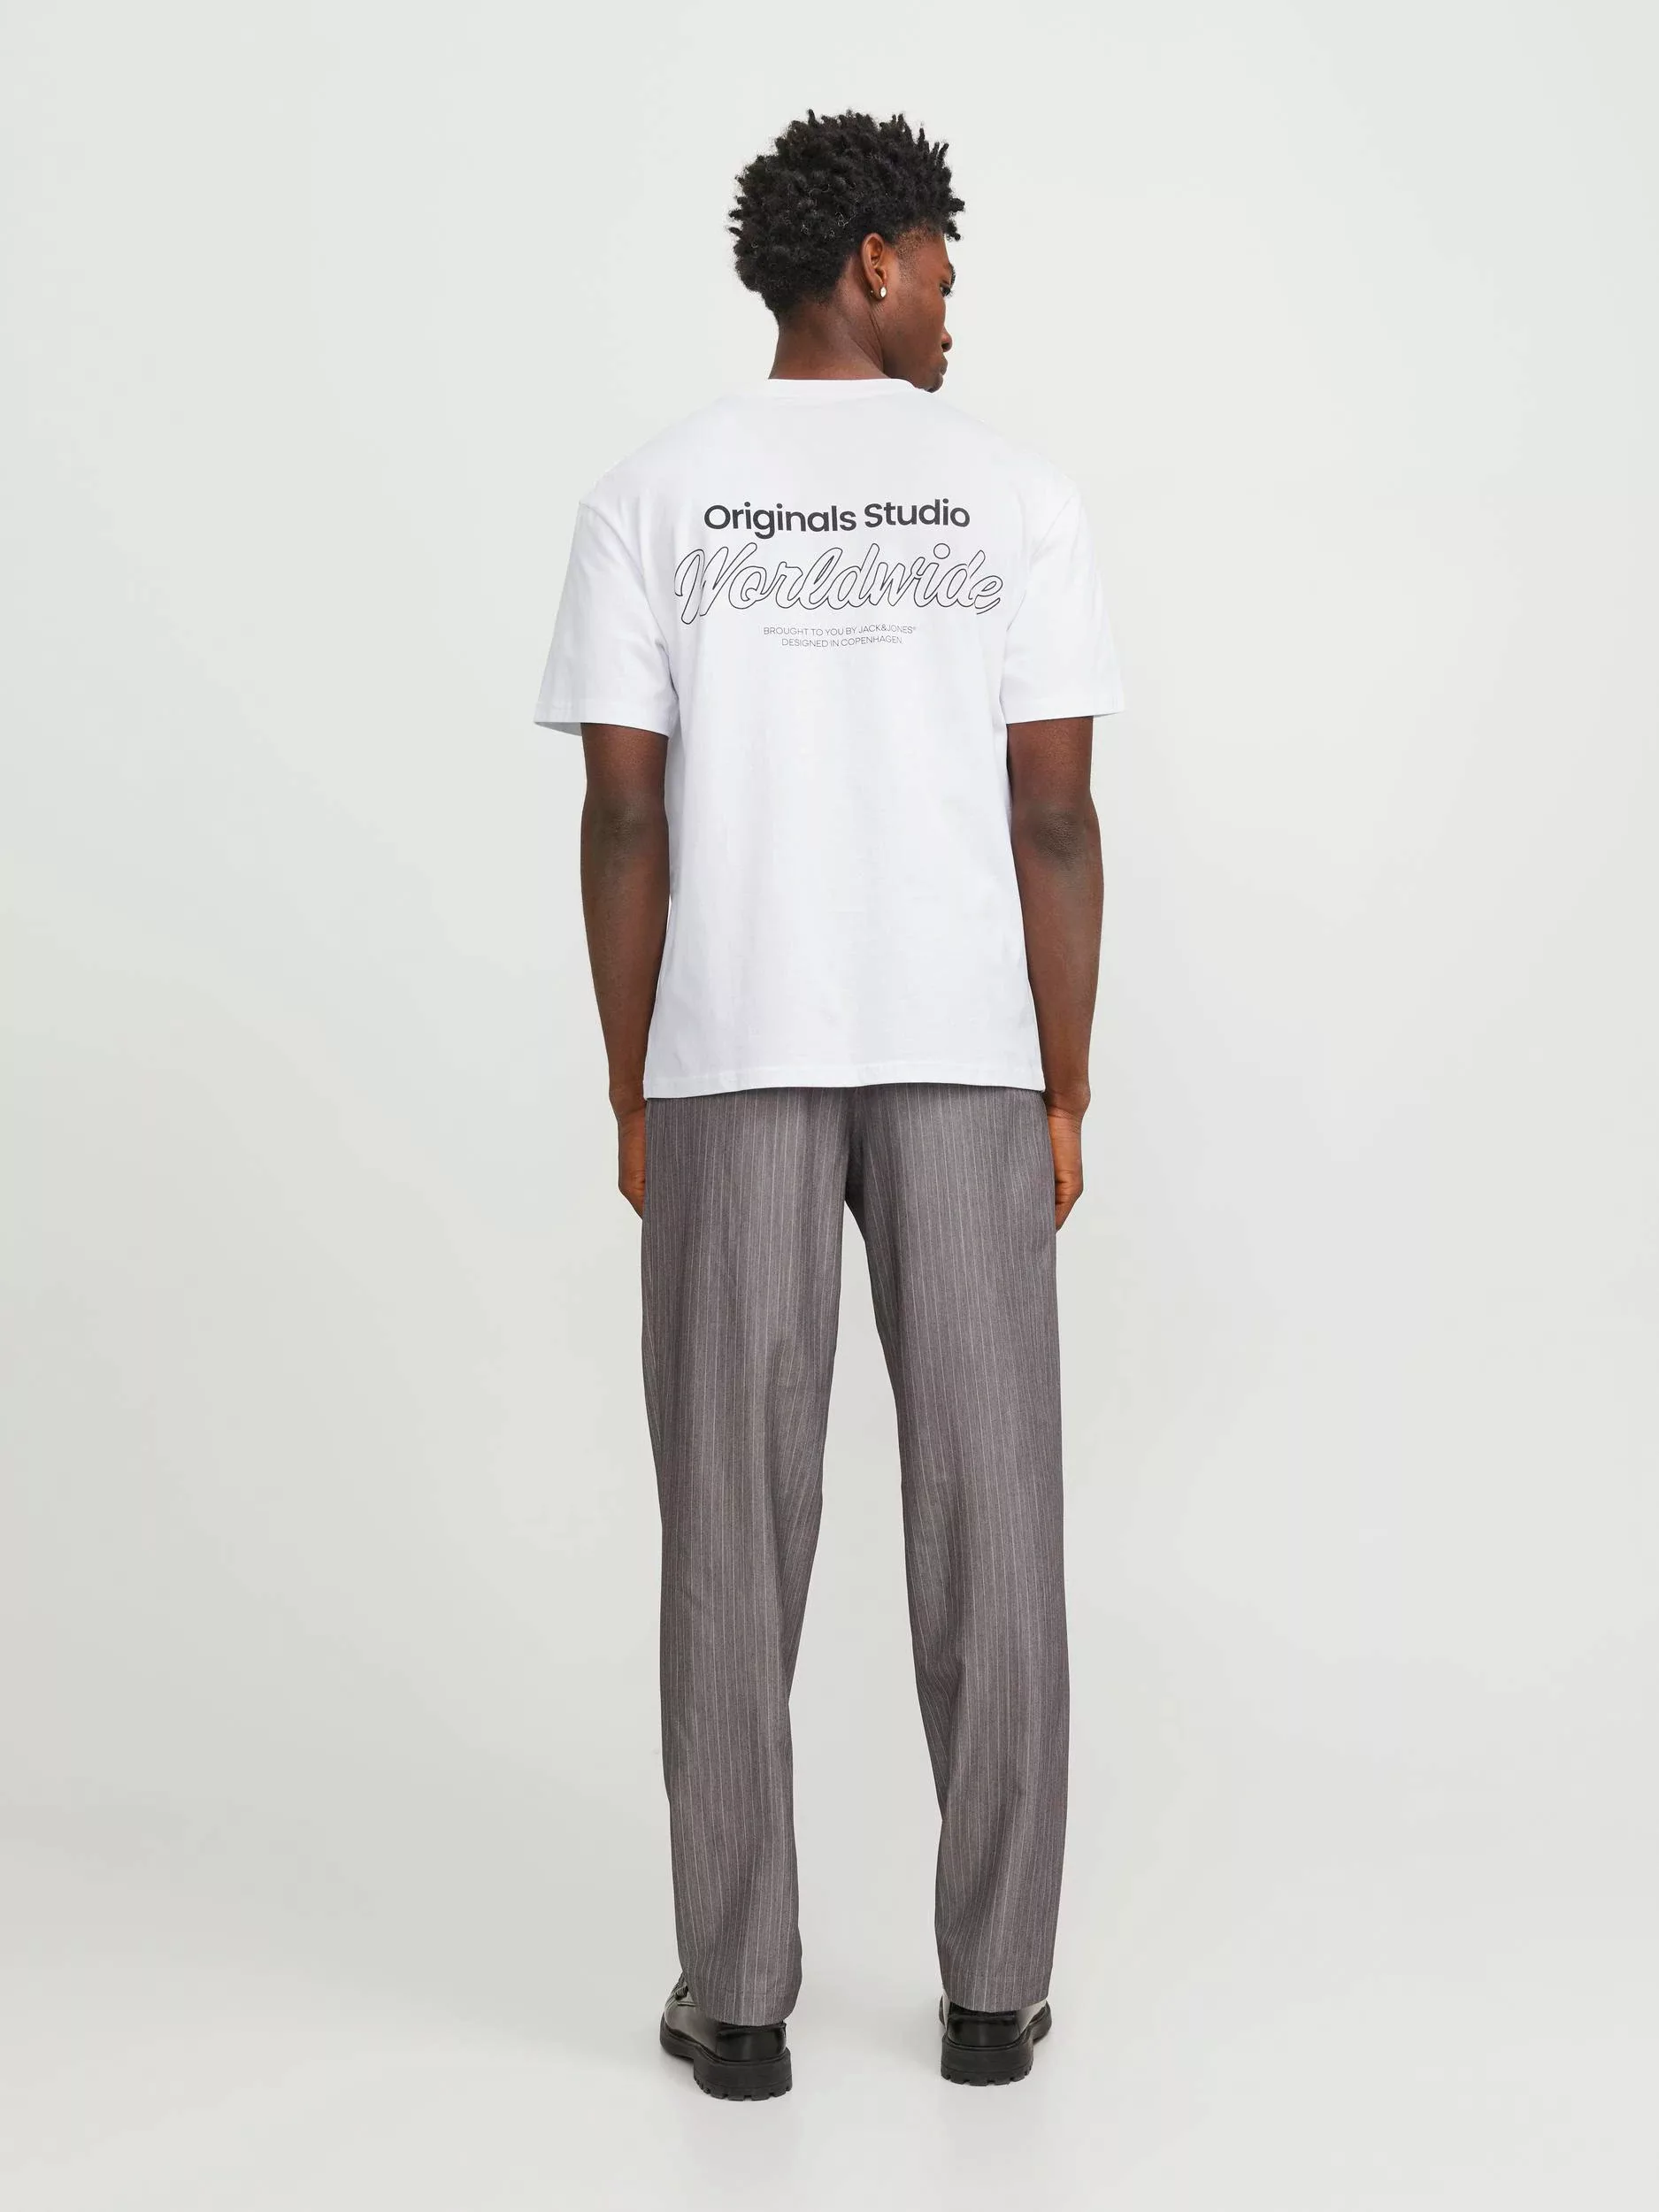 Jack & Jones Herren Rundhals T-Shirt JORVESTERBRO BACK - Relaxed Fit günstig online kaufen